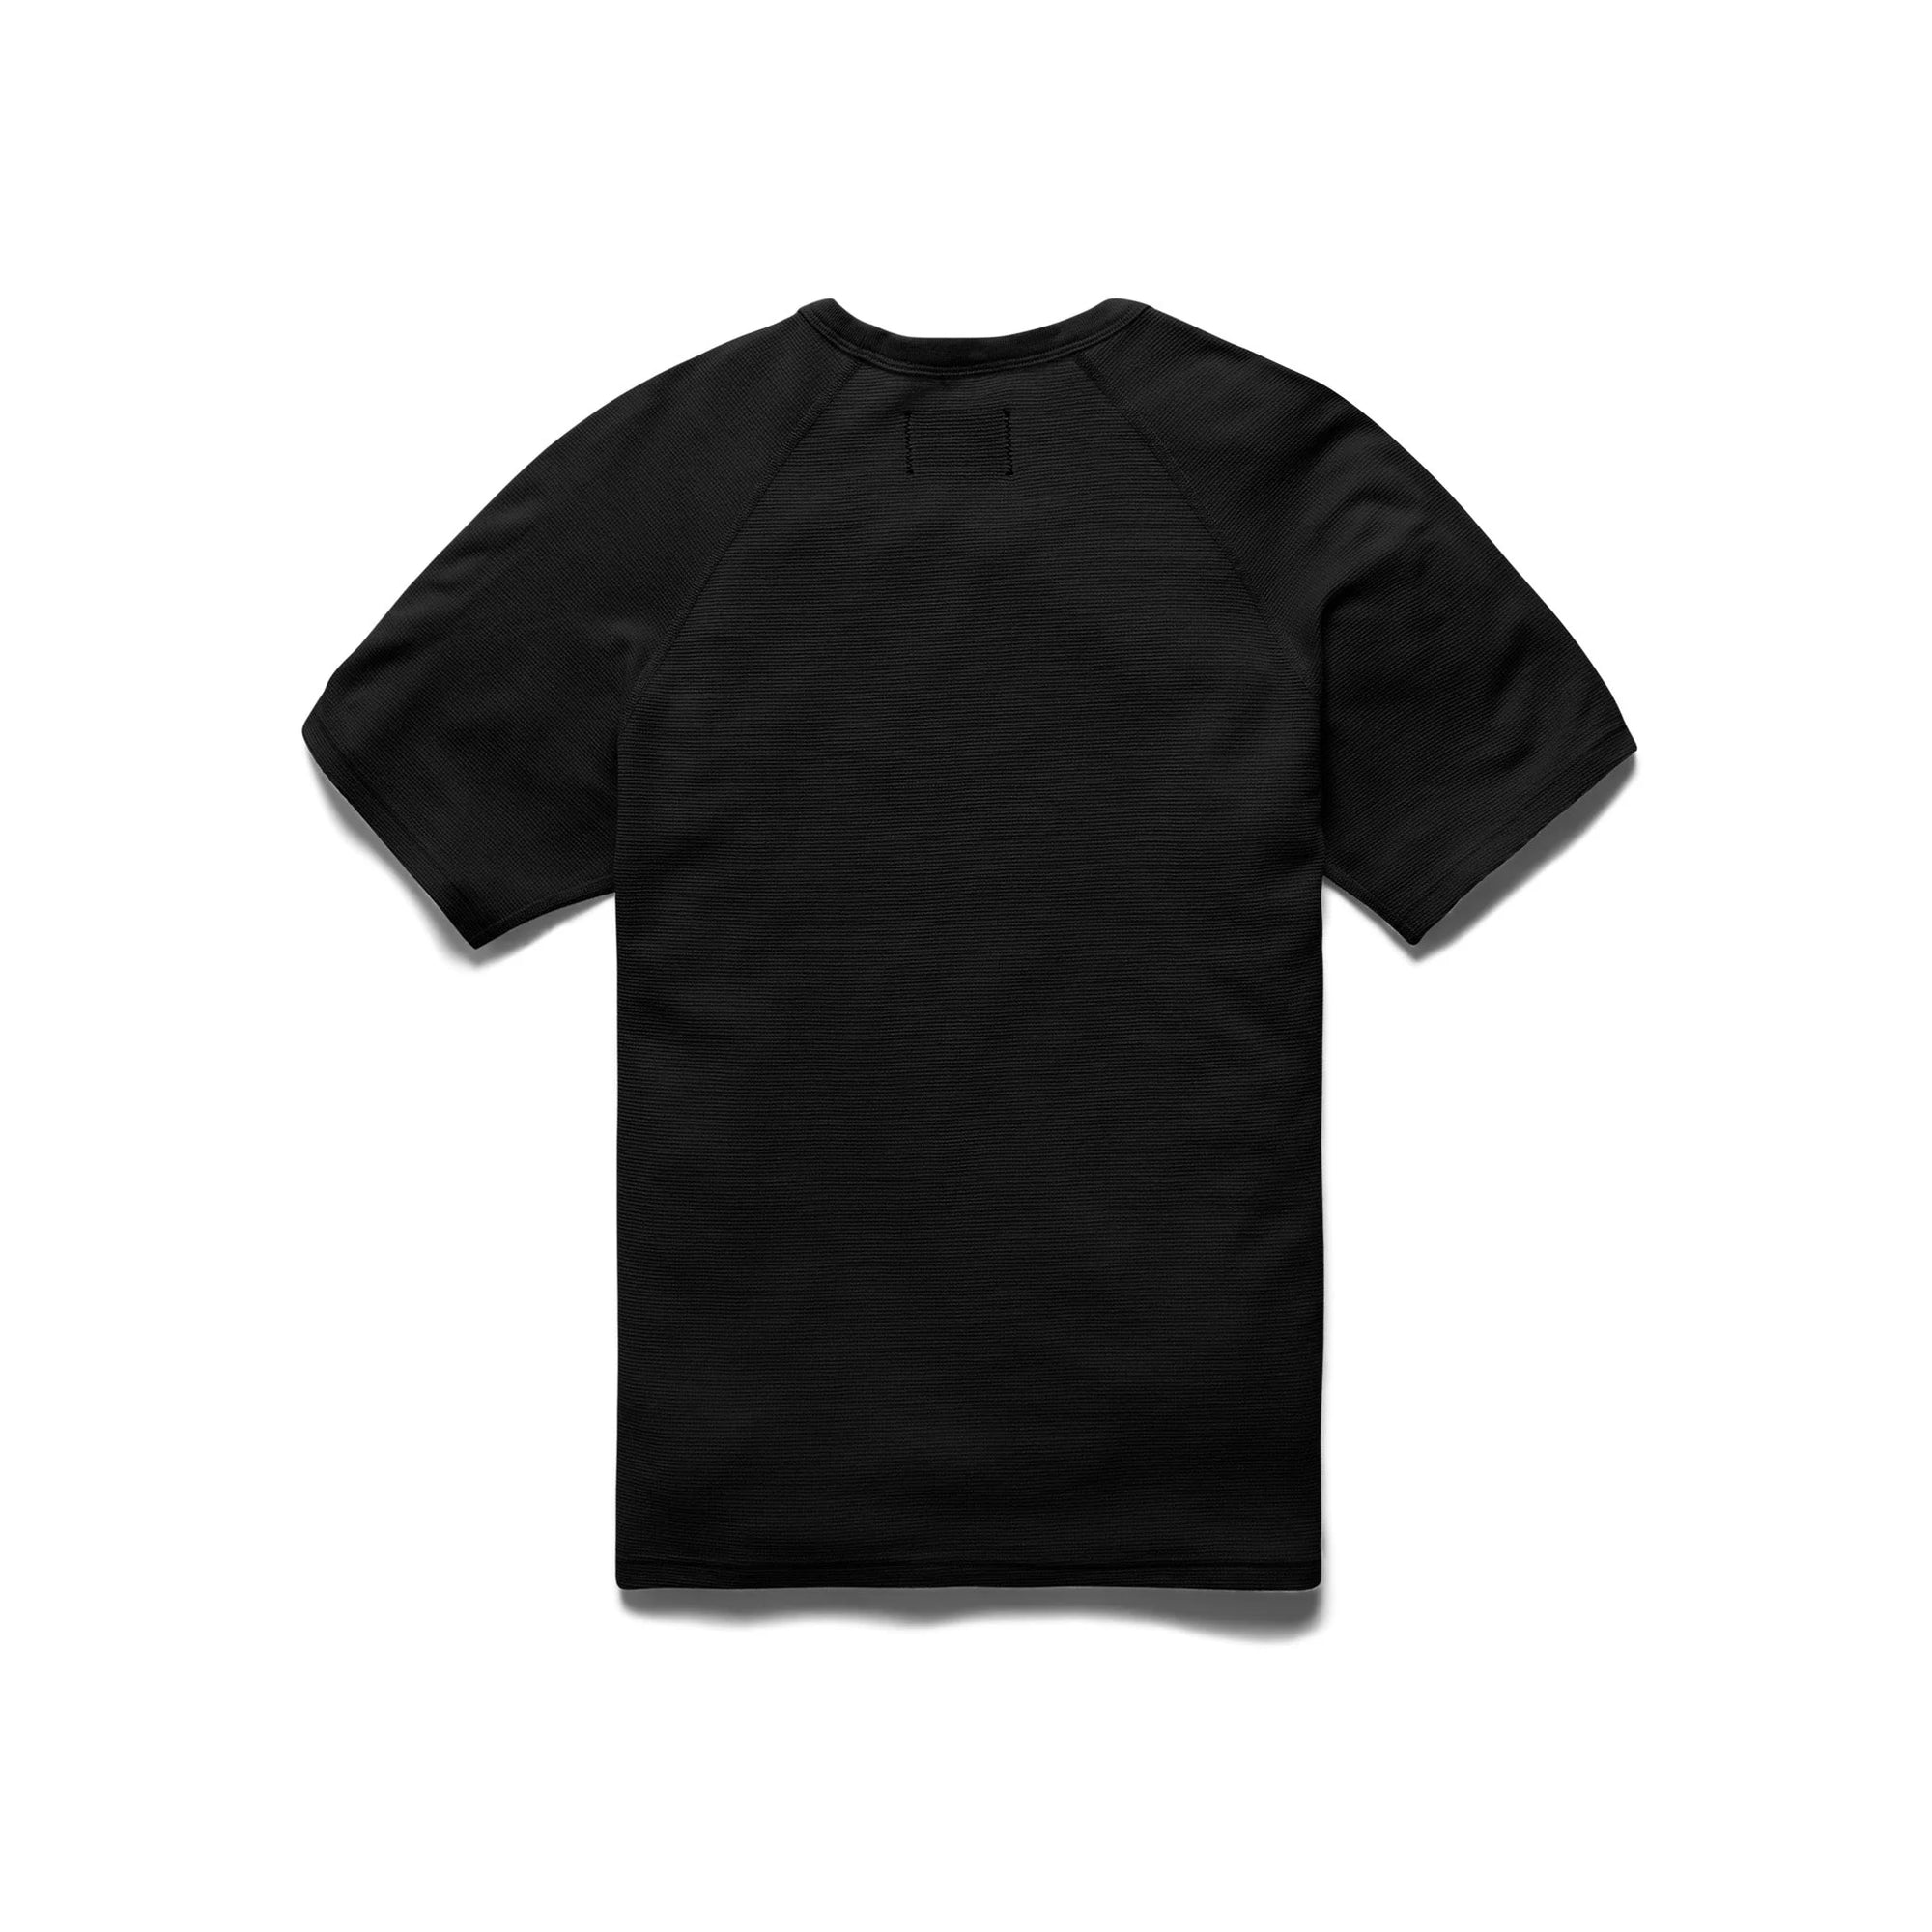 Reigning Champ Merino Thermal T-Shirt in Black